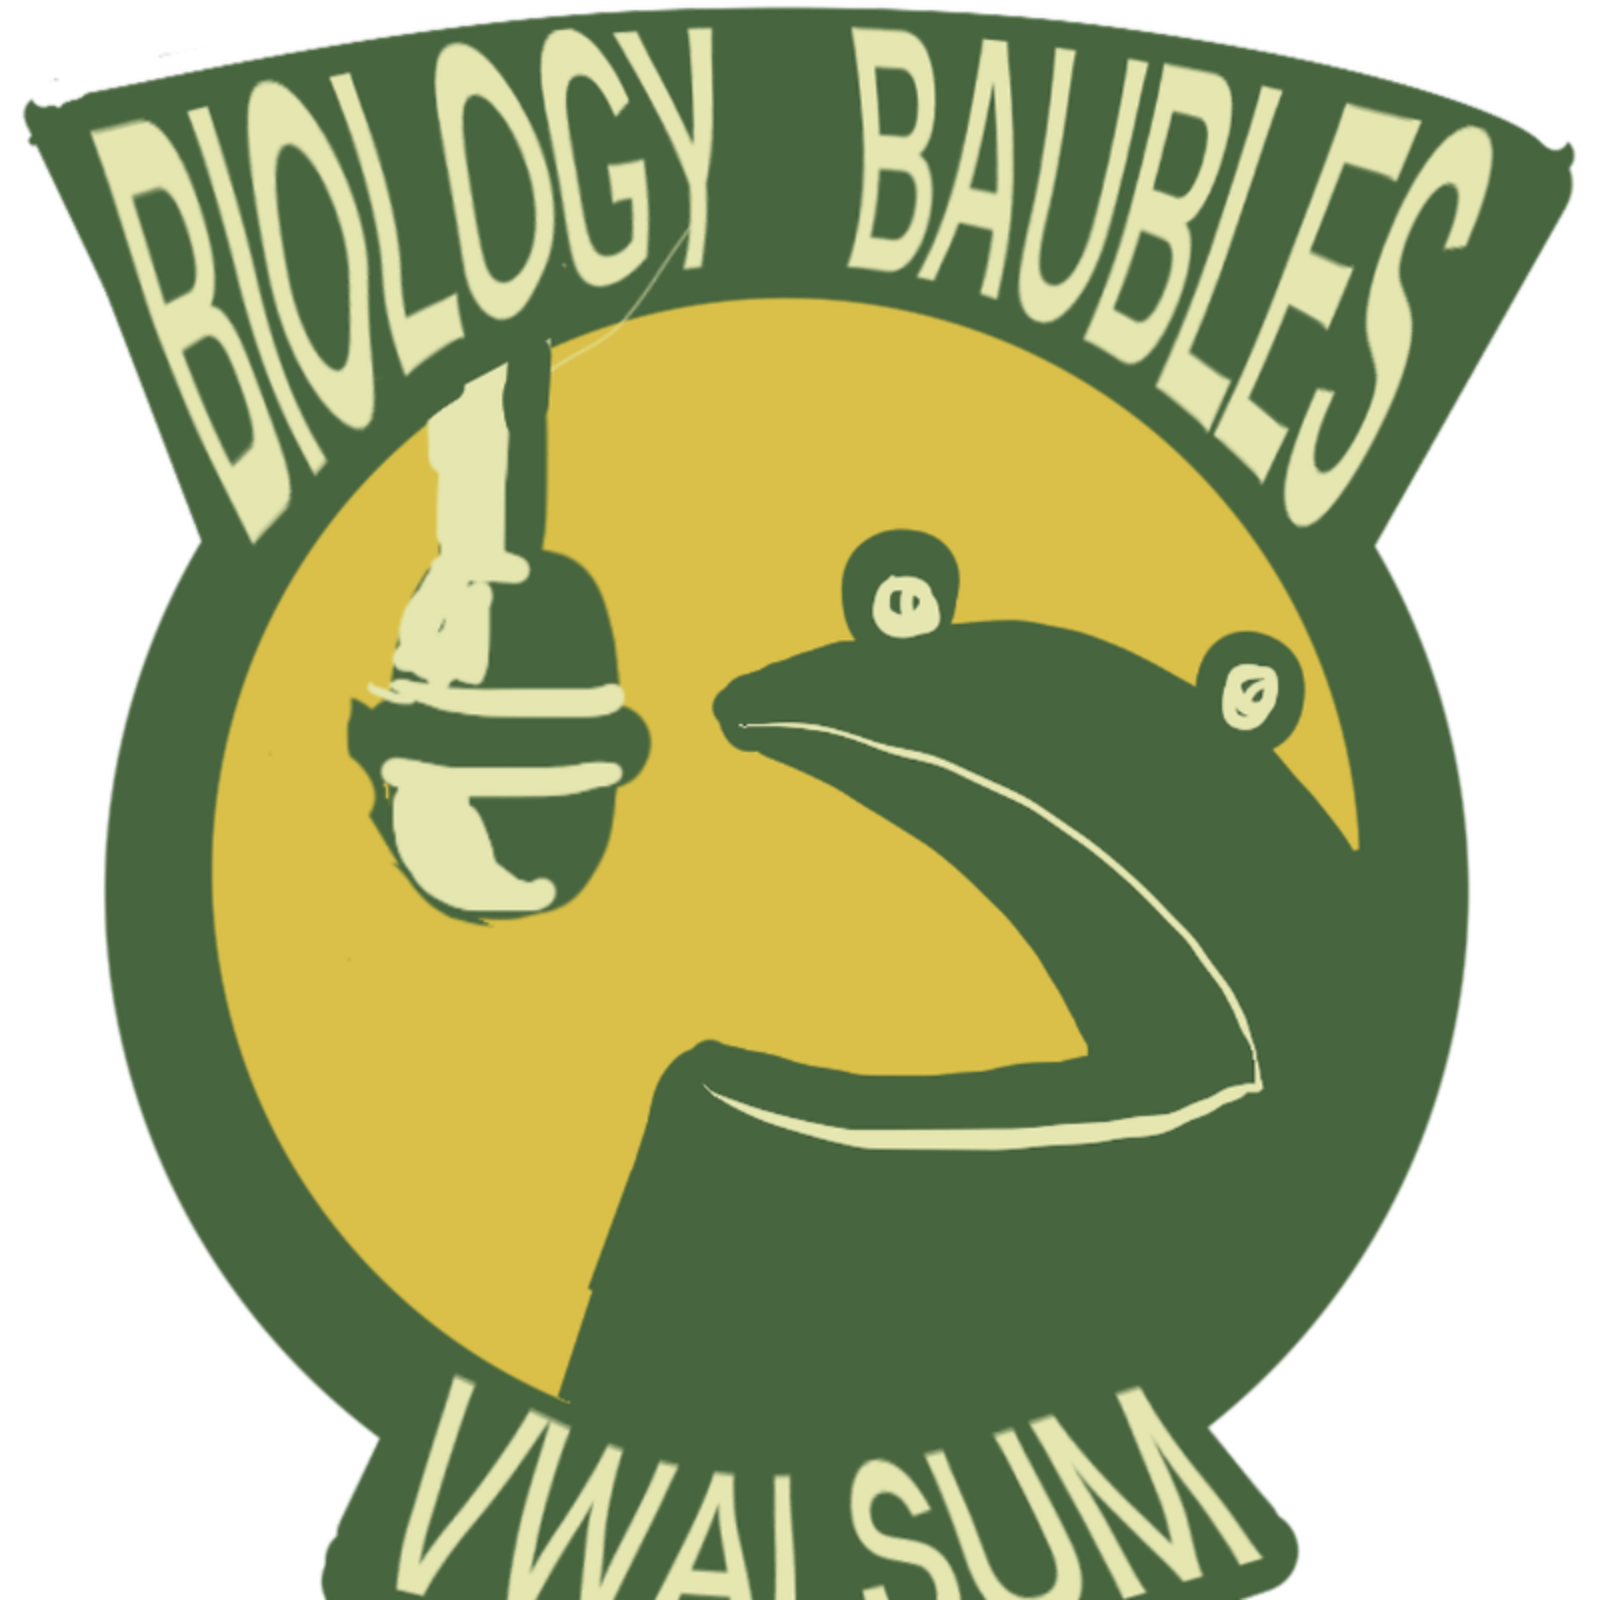 Biology Baubles - CFRC Podcast Network